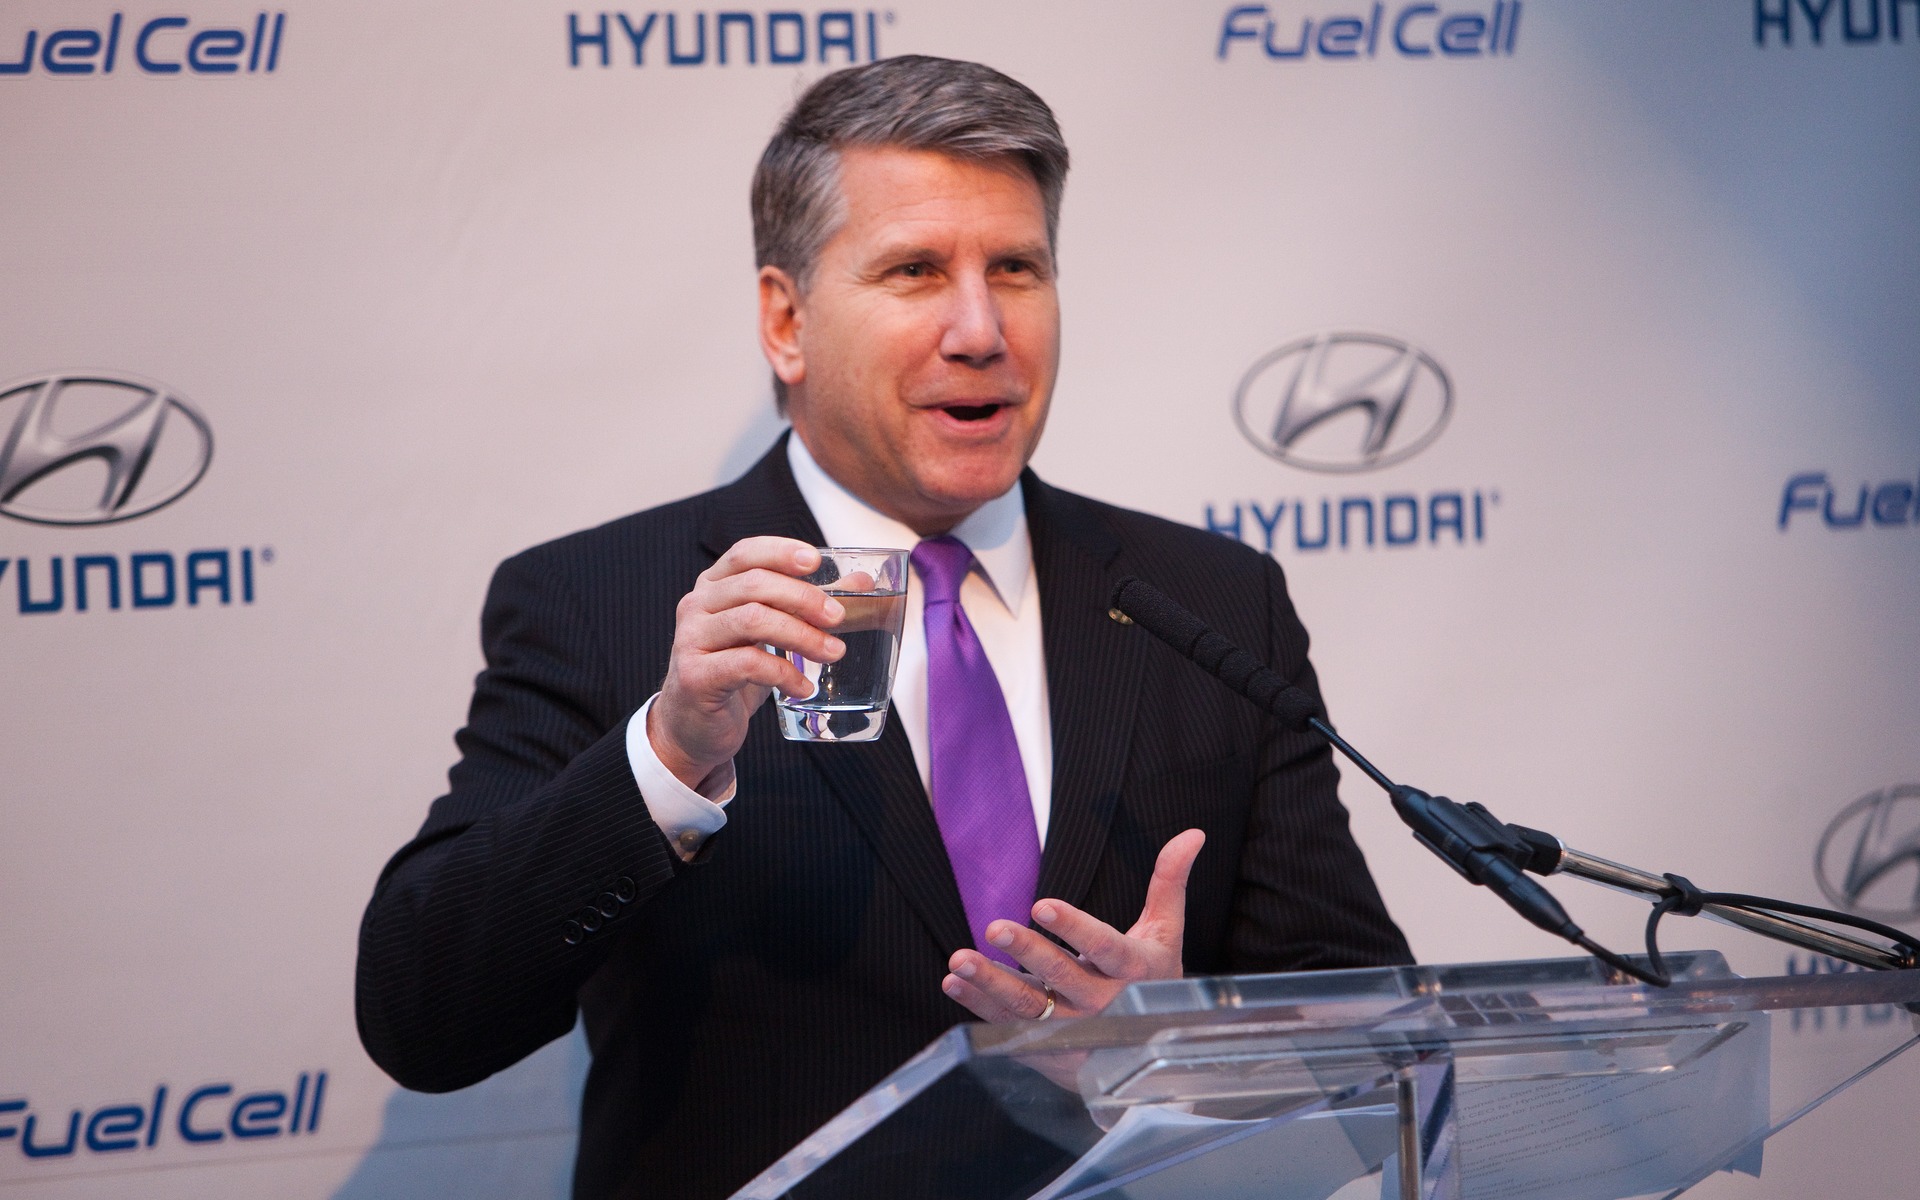 Don Romano, Président of Hyundai Canada